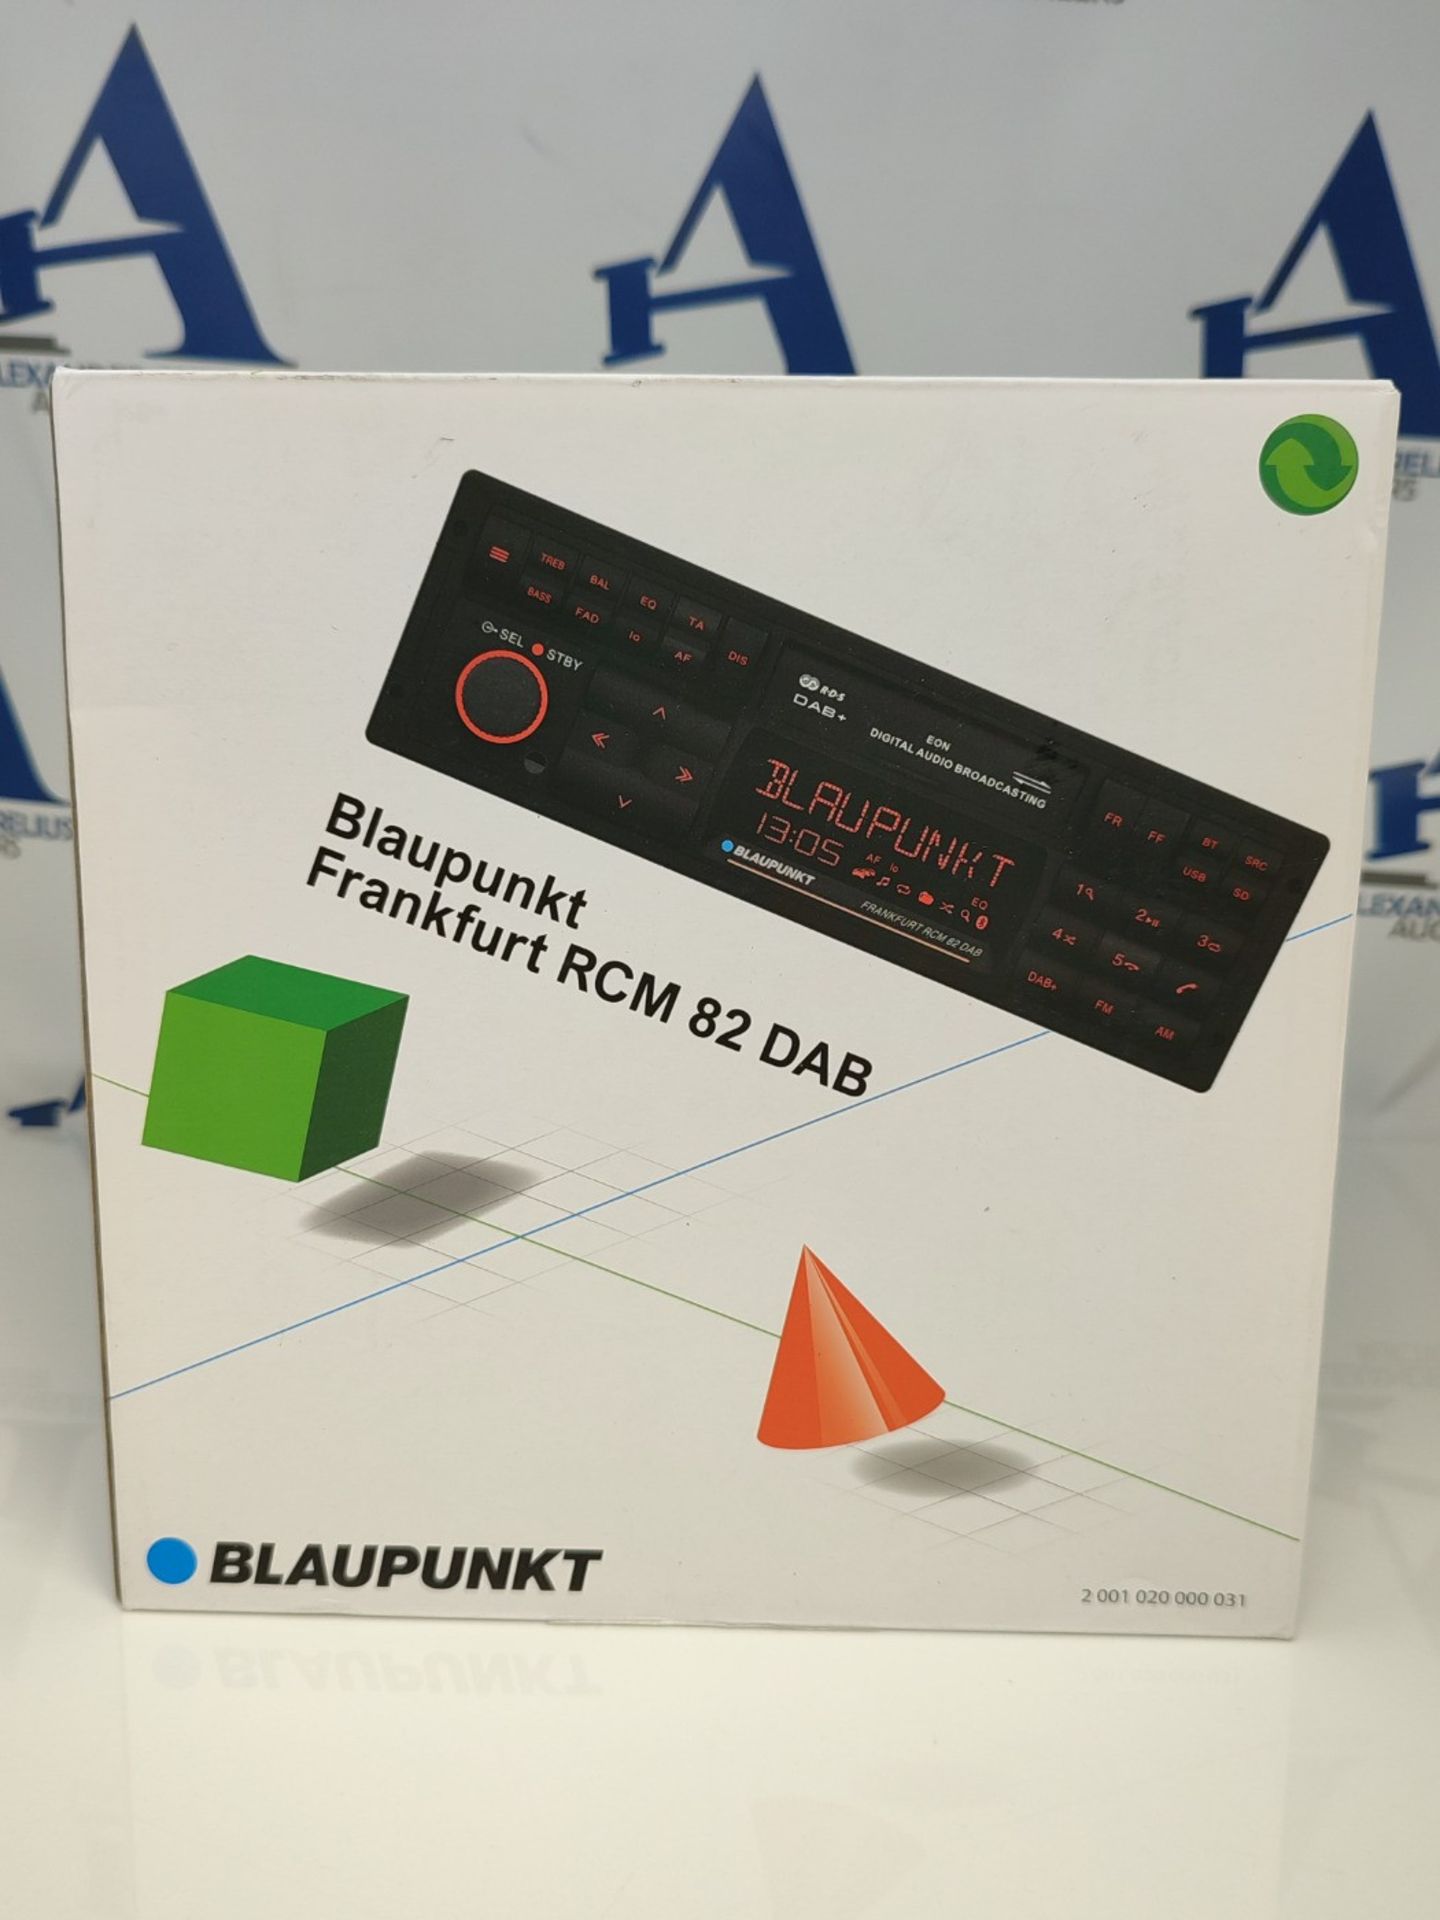 RRP £399.00 Blaupunkt Frankfurt RCM 82 DAB, 1-DIN car radio, DAB+, Bluetooth, AUX; USB, SD card in - Image 2 of 3